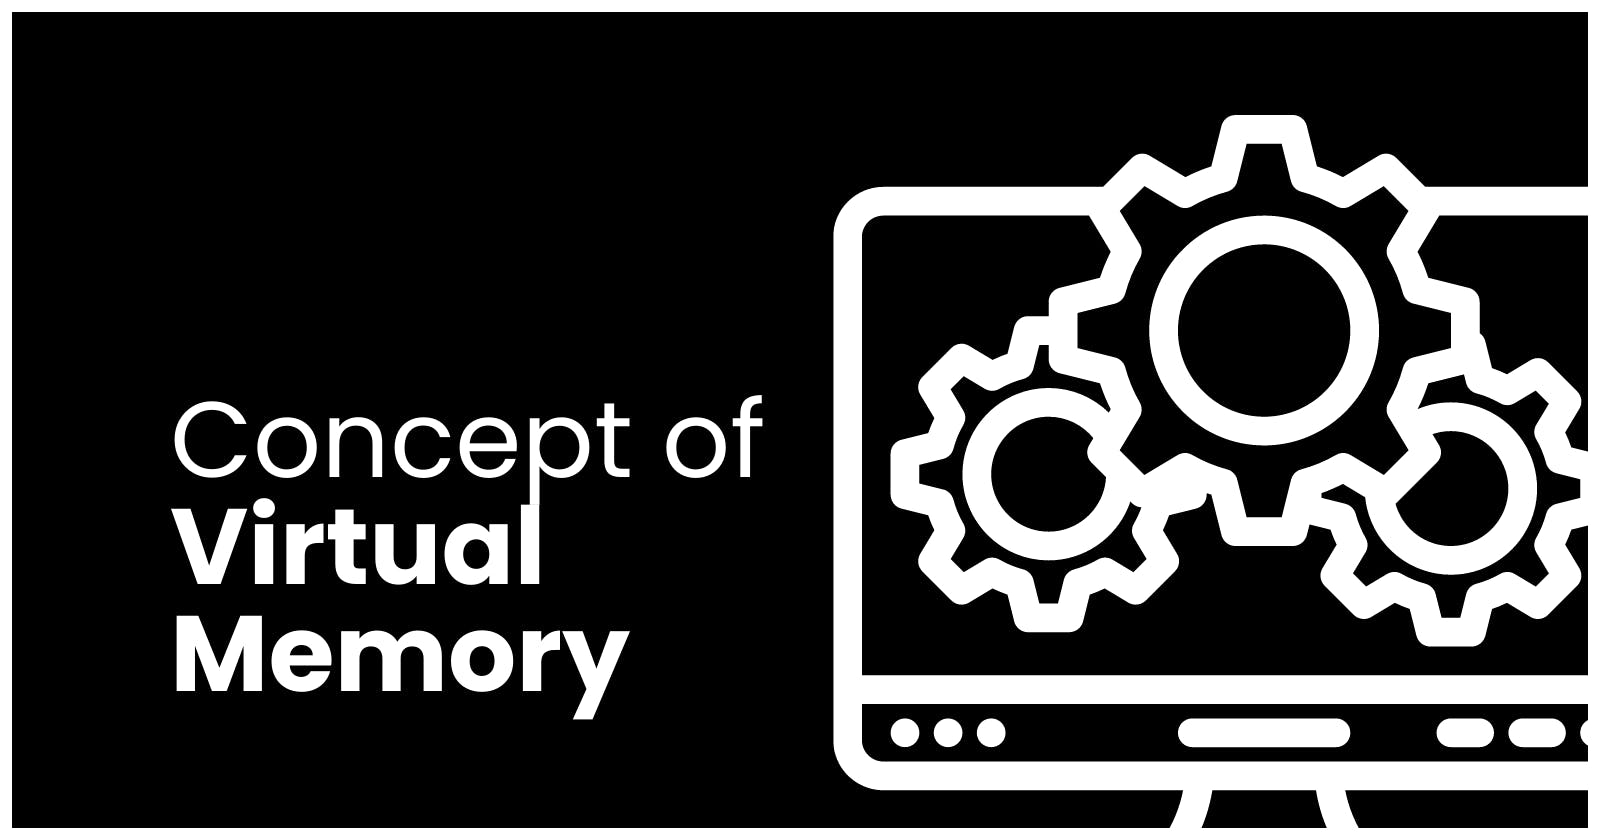 Concept of Virtual Memory